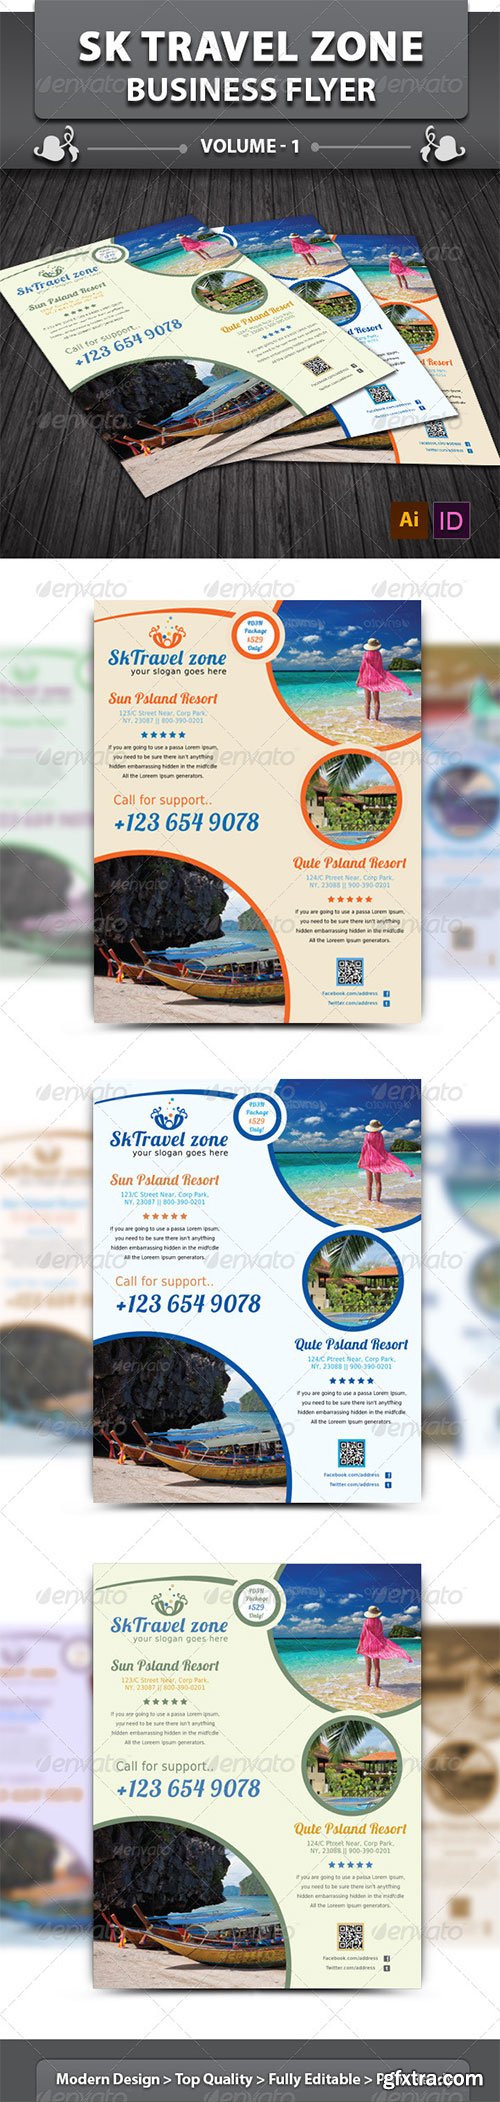 GraphicRiver - Sk Travel Zone Business Flyer v1